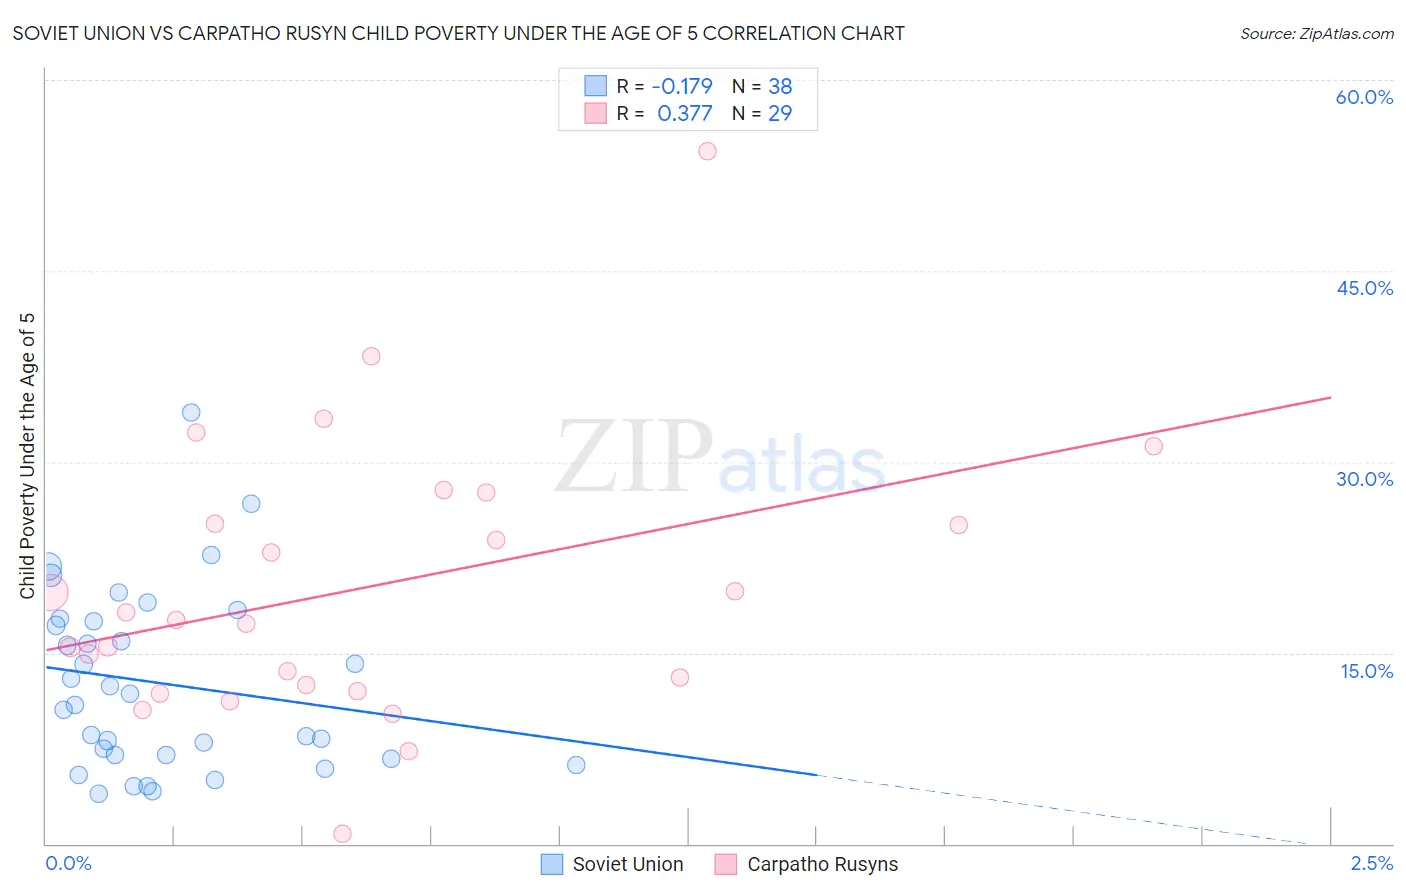 Soviet Union vs Carpatho Rusyn Child Poverty Under the Age of 5